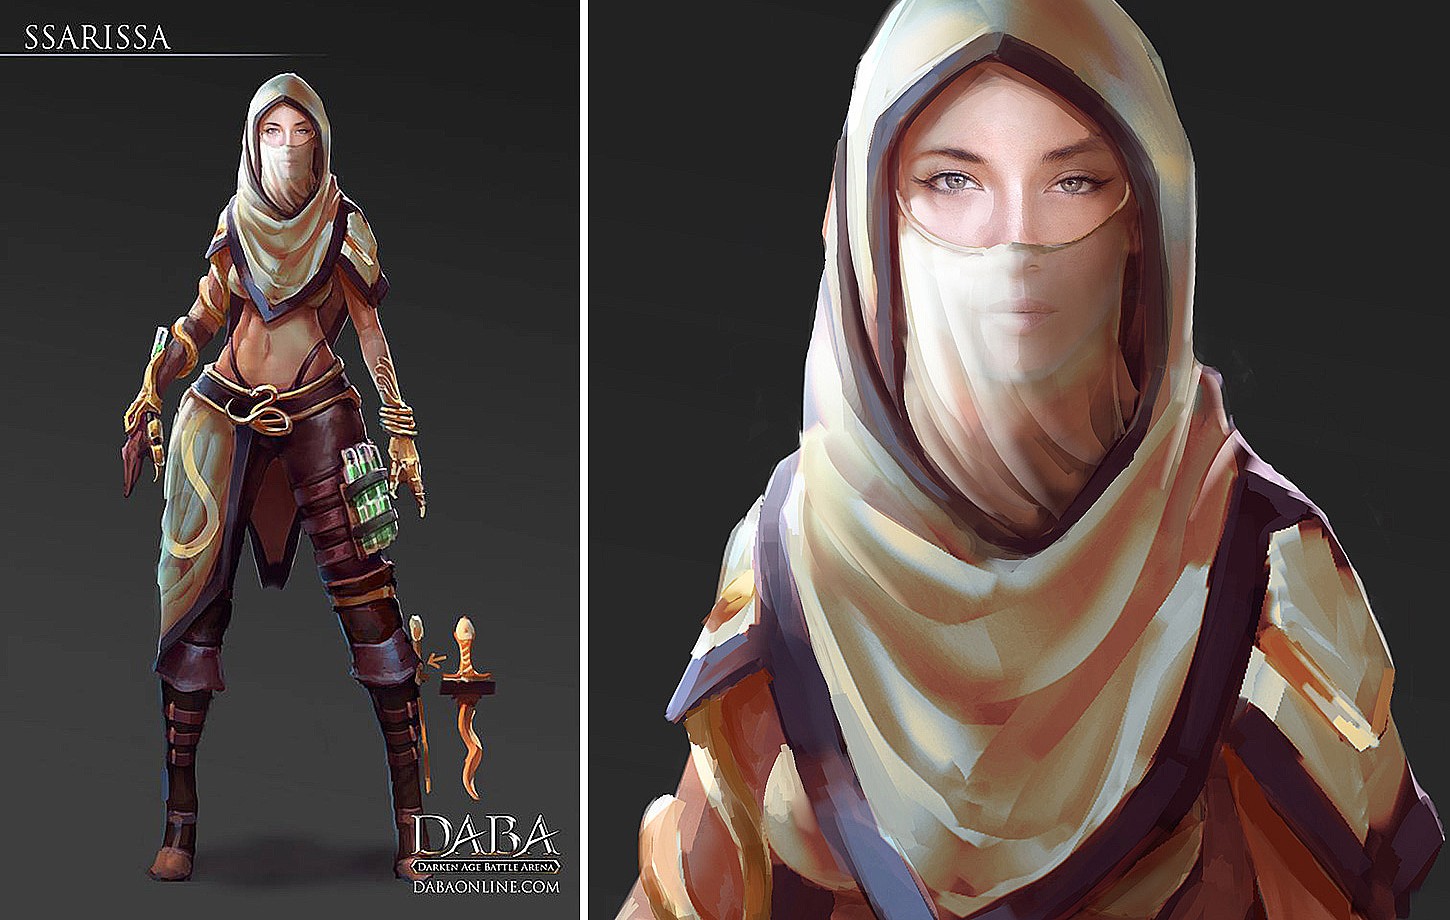 DABA - Character concept-arts